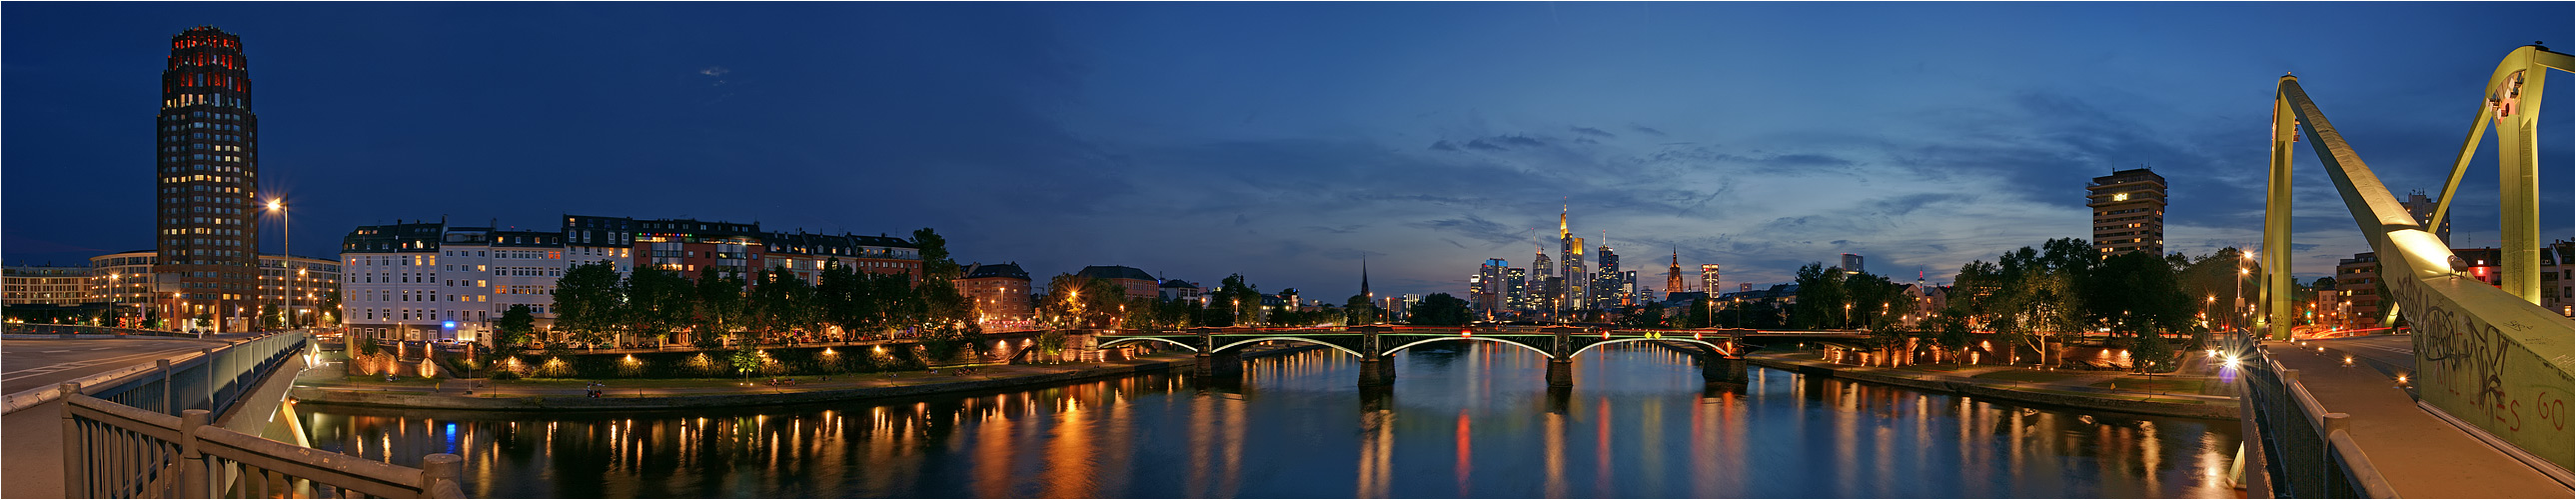 Sommernacht in Frankfurt